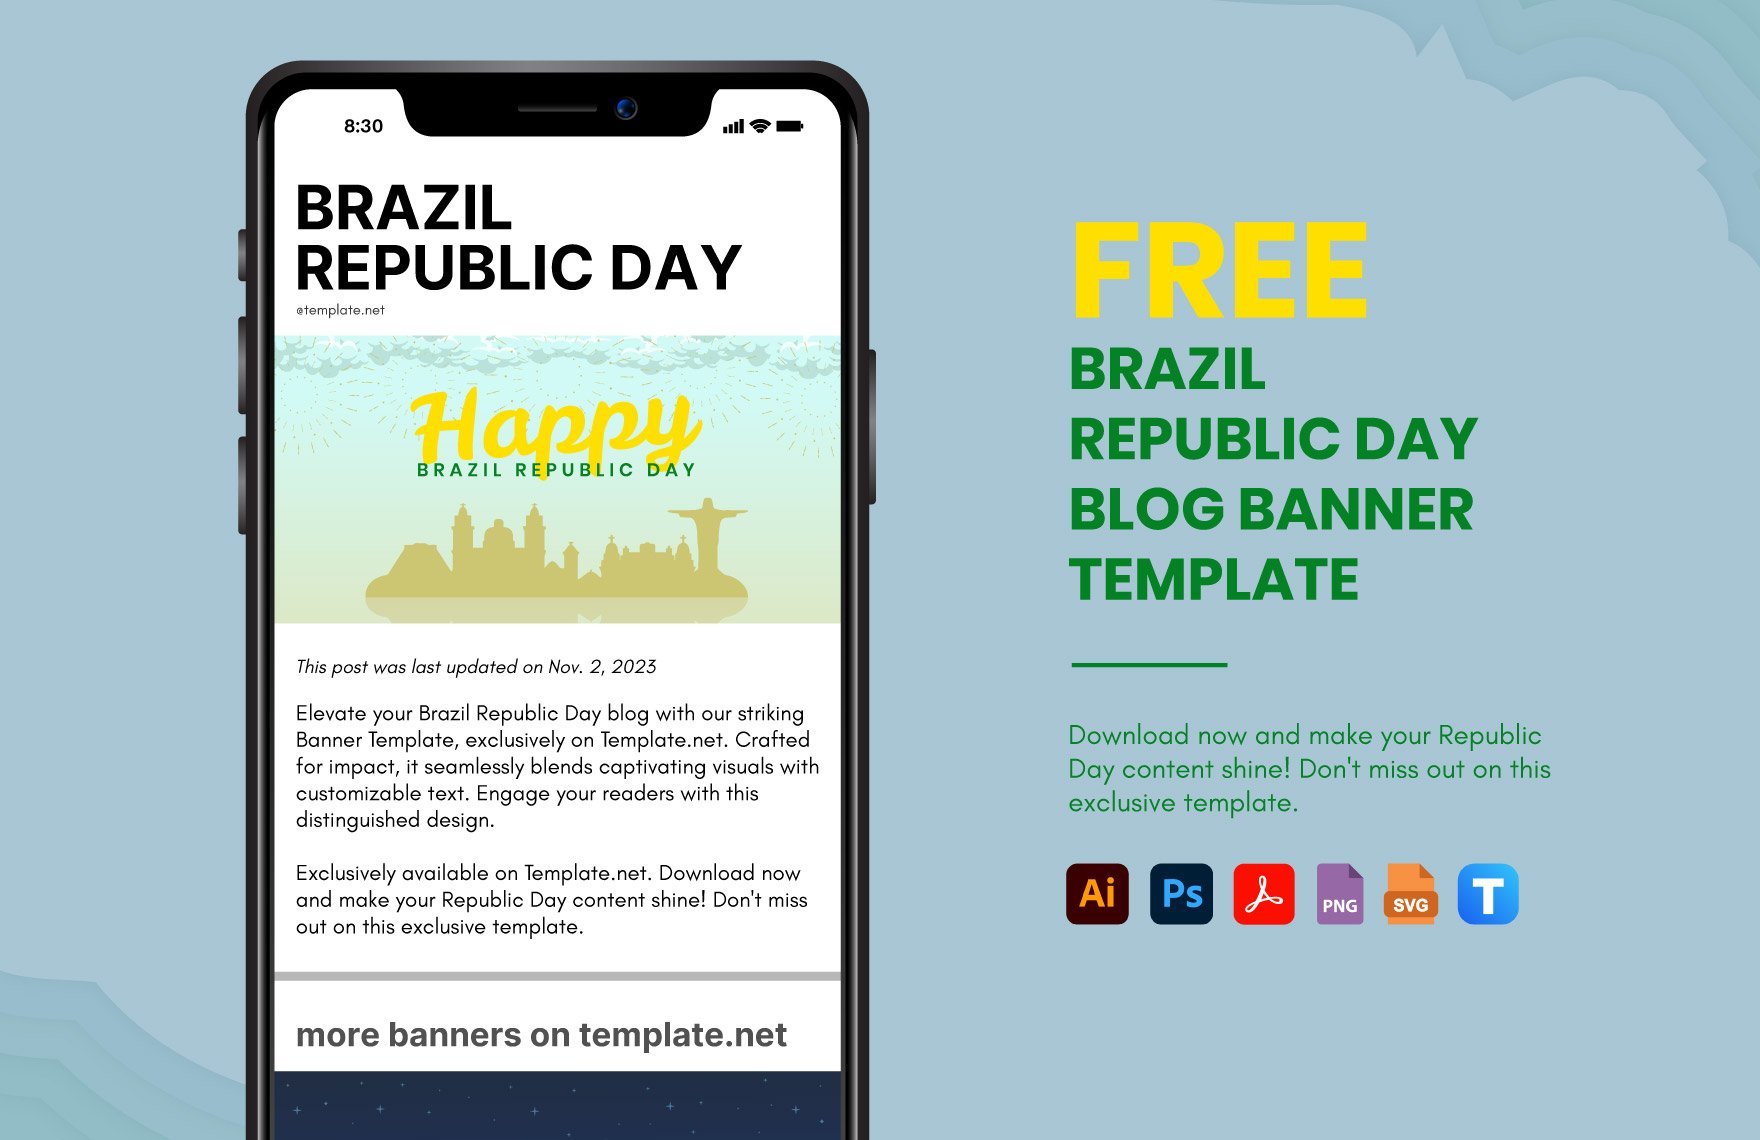 Free Brazil Republic Day Blog Banner Template in PDF, Illustrator, PSD, SVG, PNG